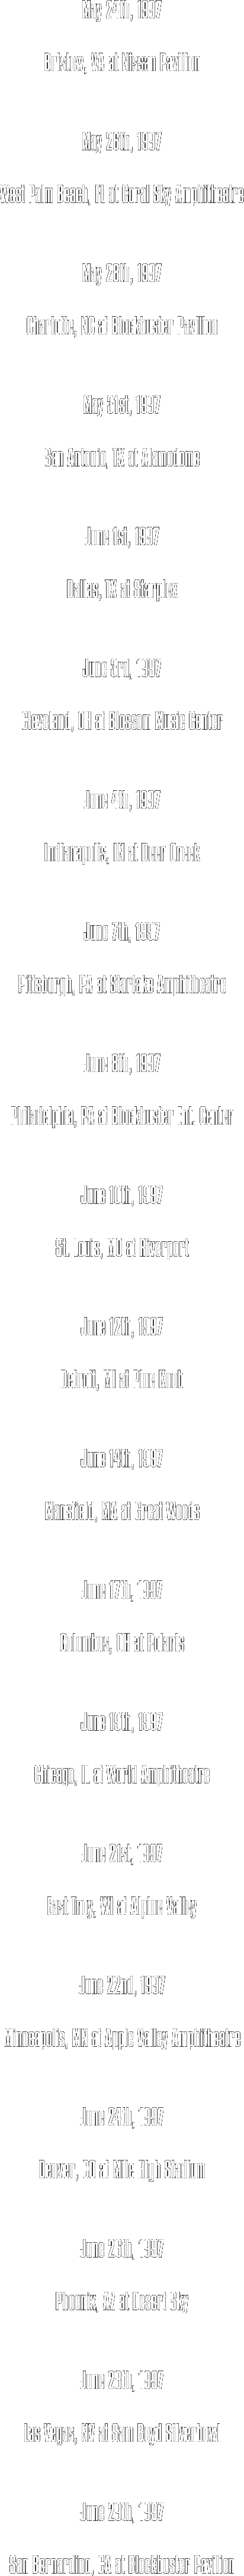 [Tour Dates]